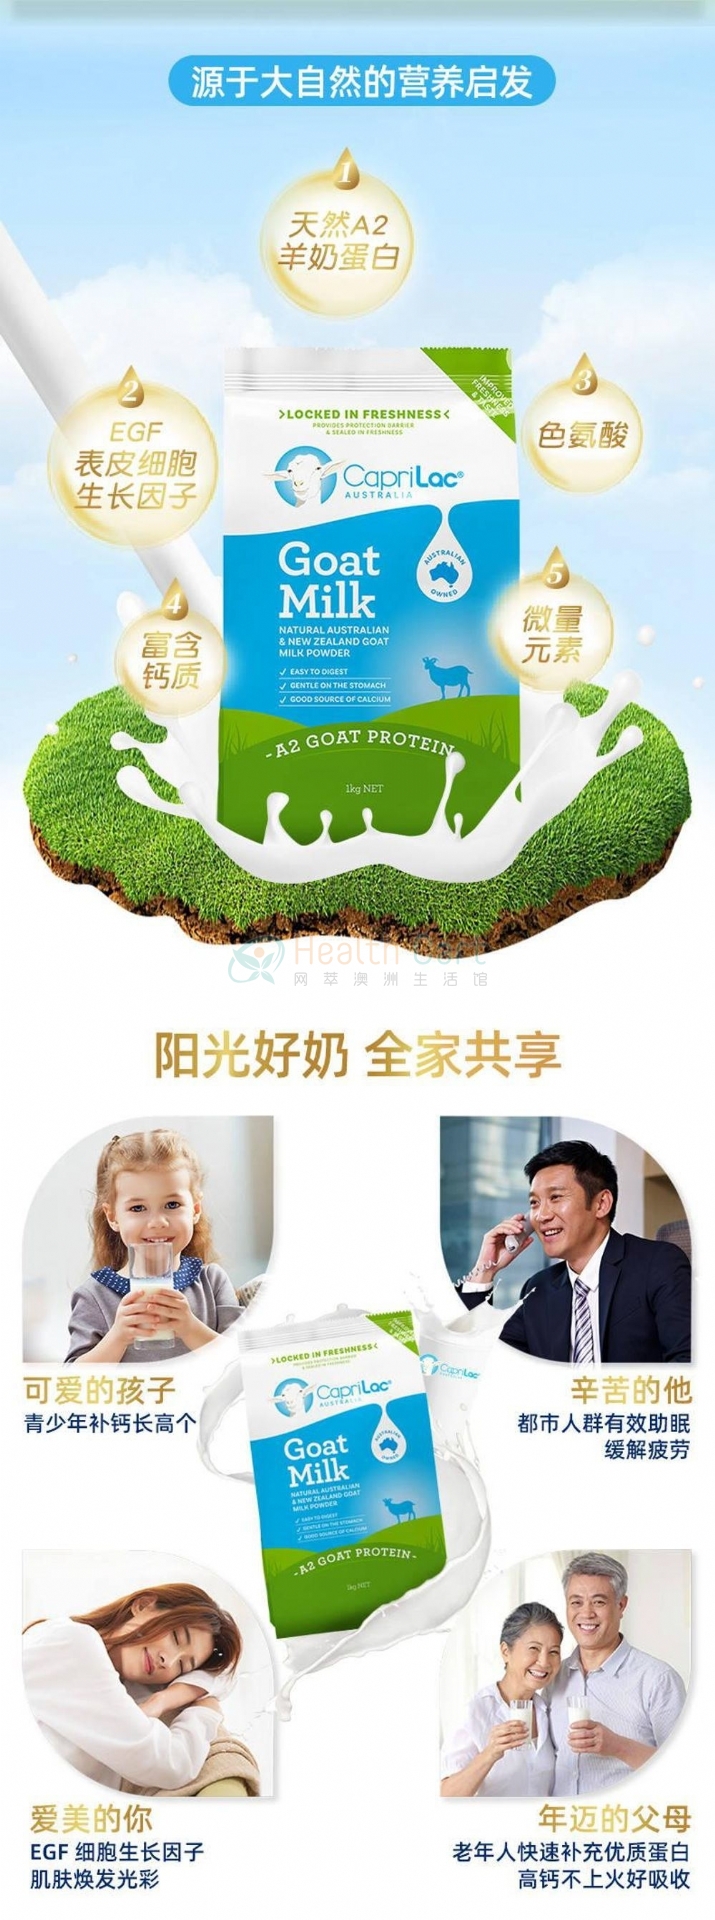 CapriLac成人羊奶粉（仅限发货到中国大陆，每个订单限购6包） - @caprilac goat milk powder 1kgmaximum 6 packs per order - 13 - Healthcart 网萃澳洲生活馆